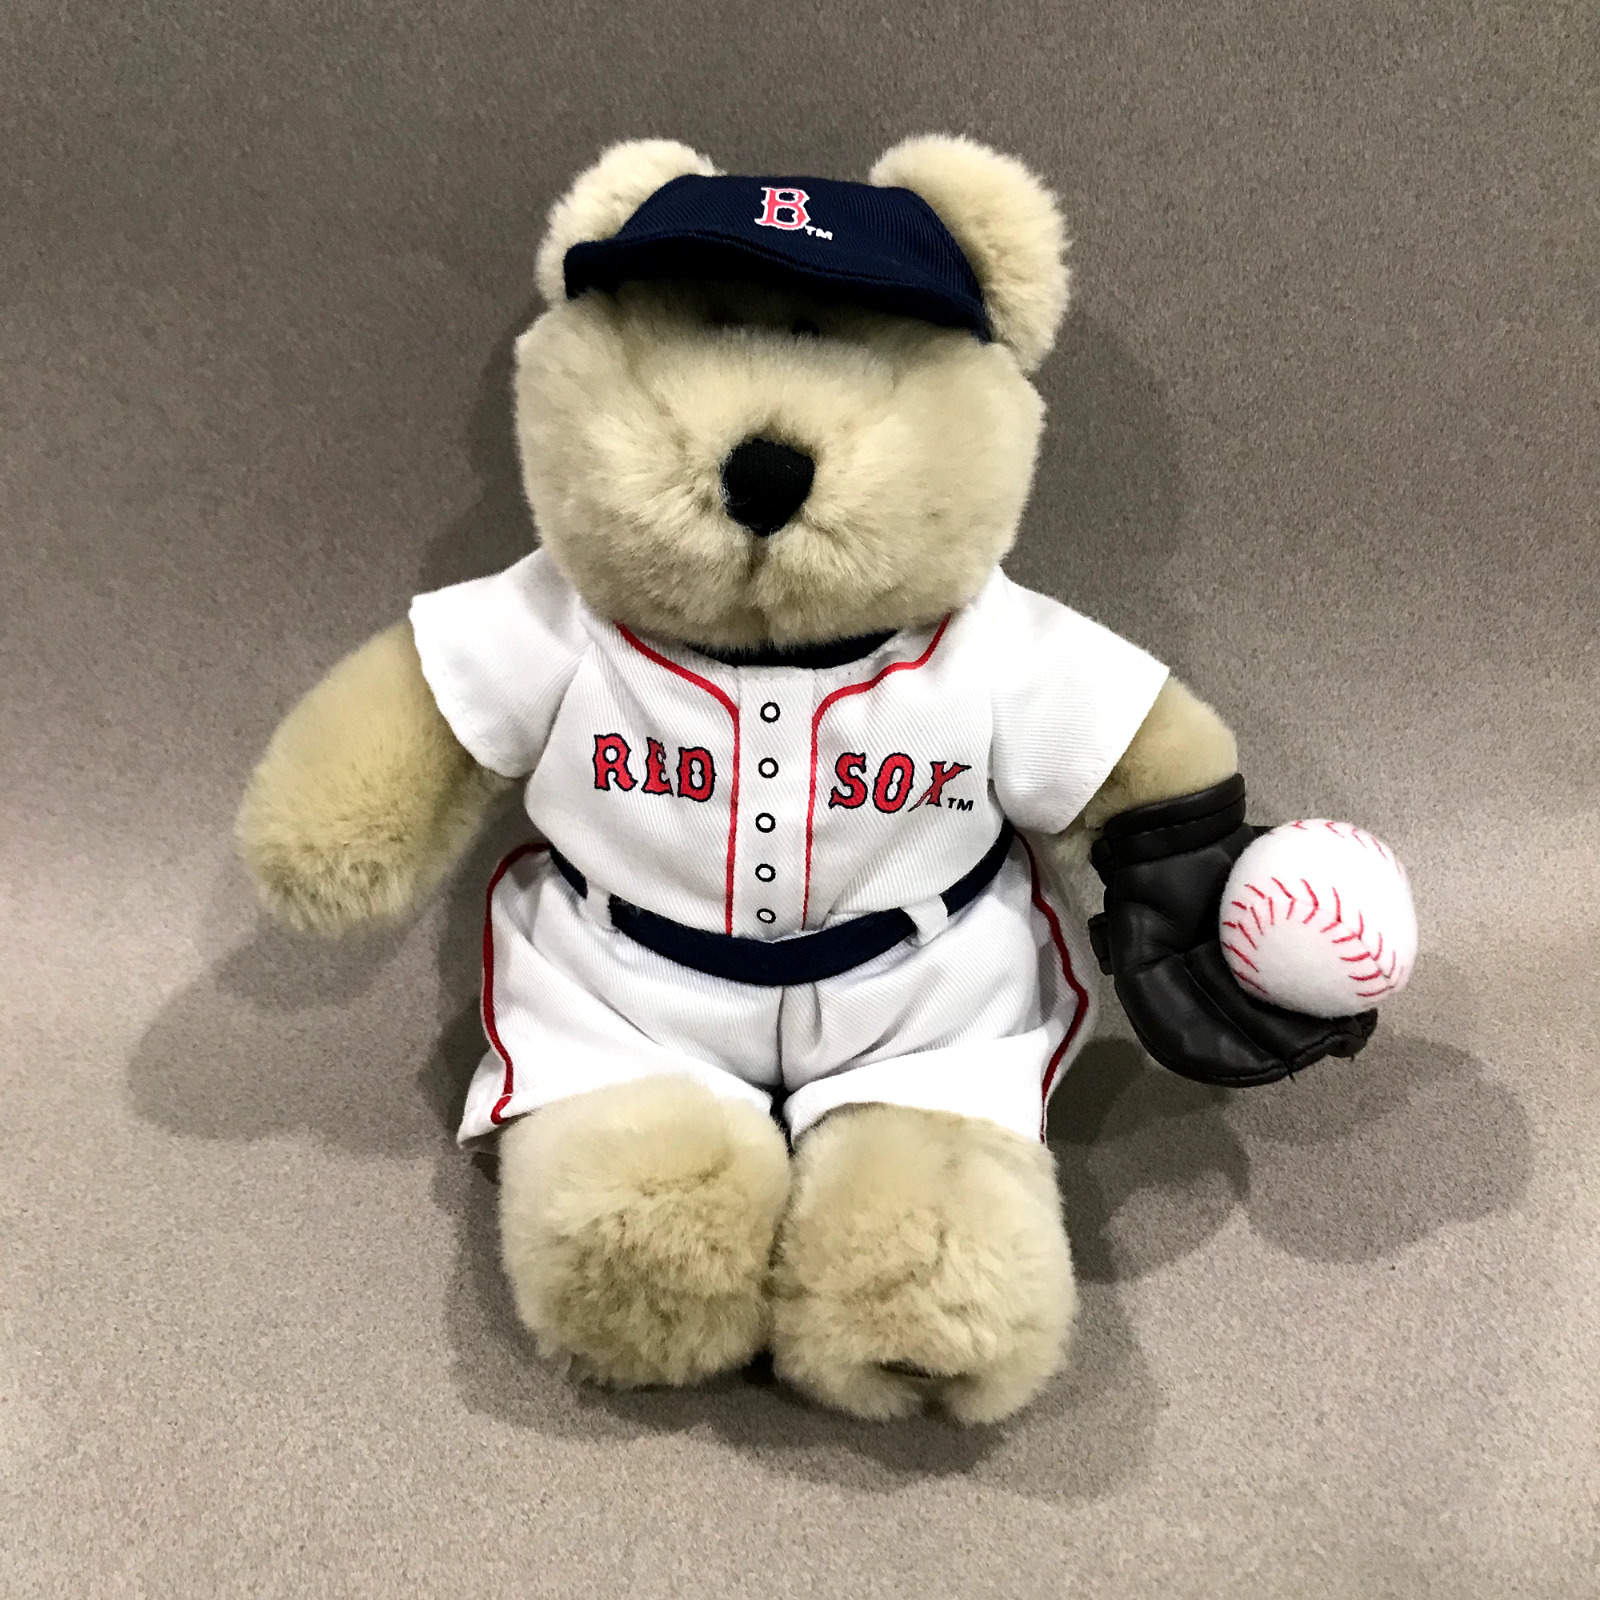 Starbucks Bearista Bear 2003 MLB Boston Red Sox 1st Edition Plush Stuffed Animal